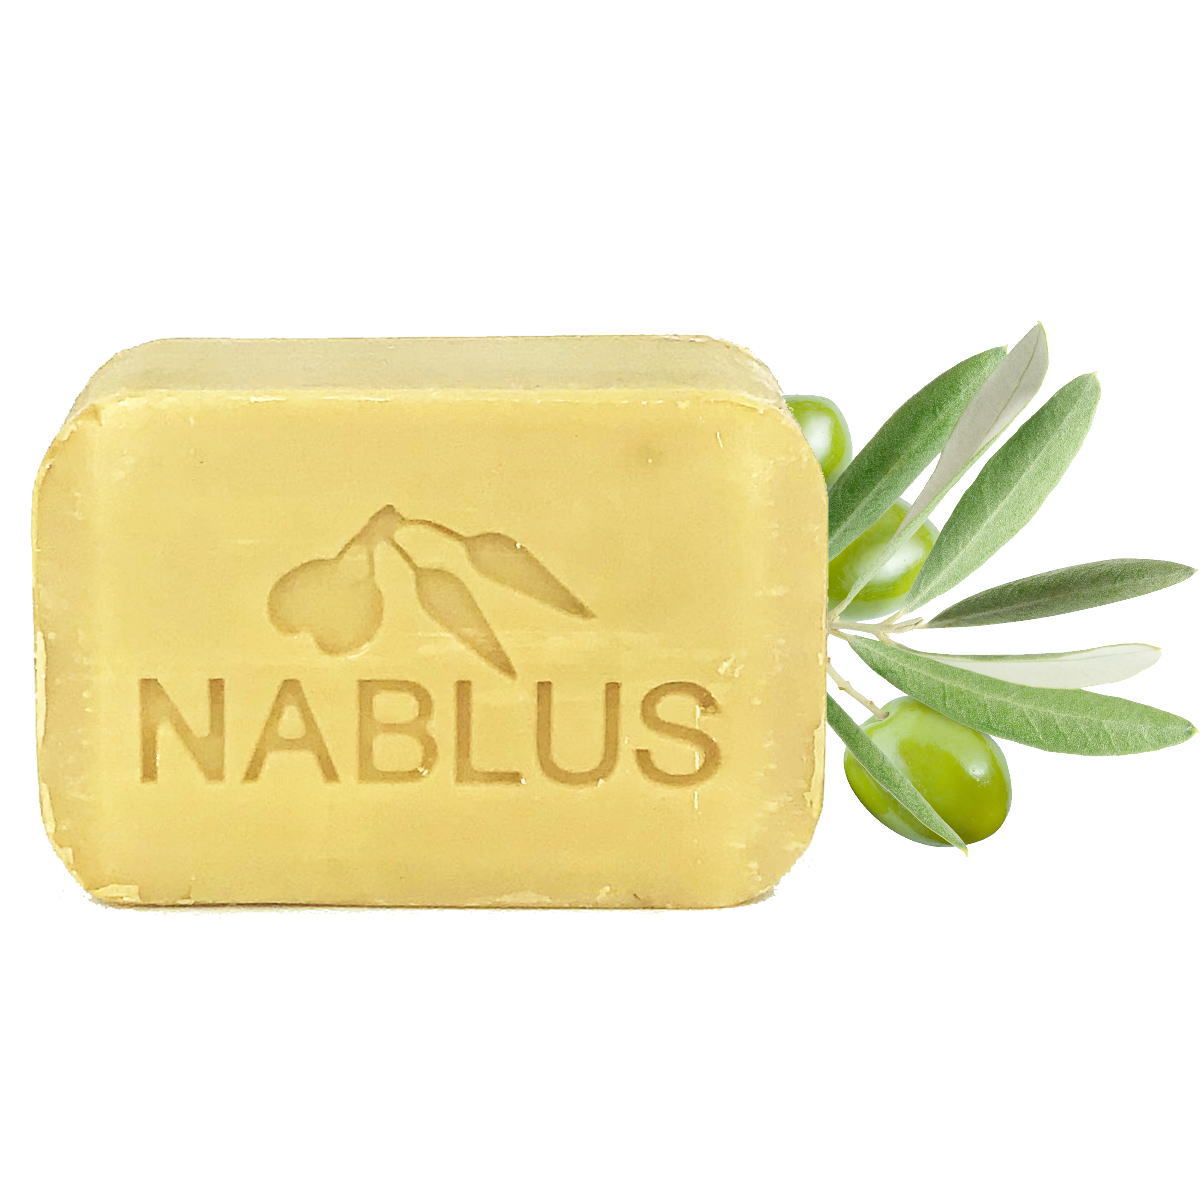 Nablus Soap ナーブルスソープ – ナチュラルオリーブオイル – 無添加 オーガニック石鹸